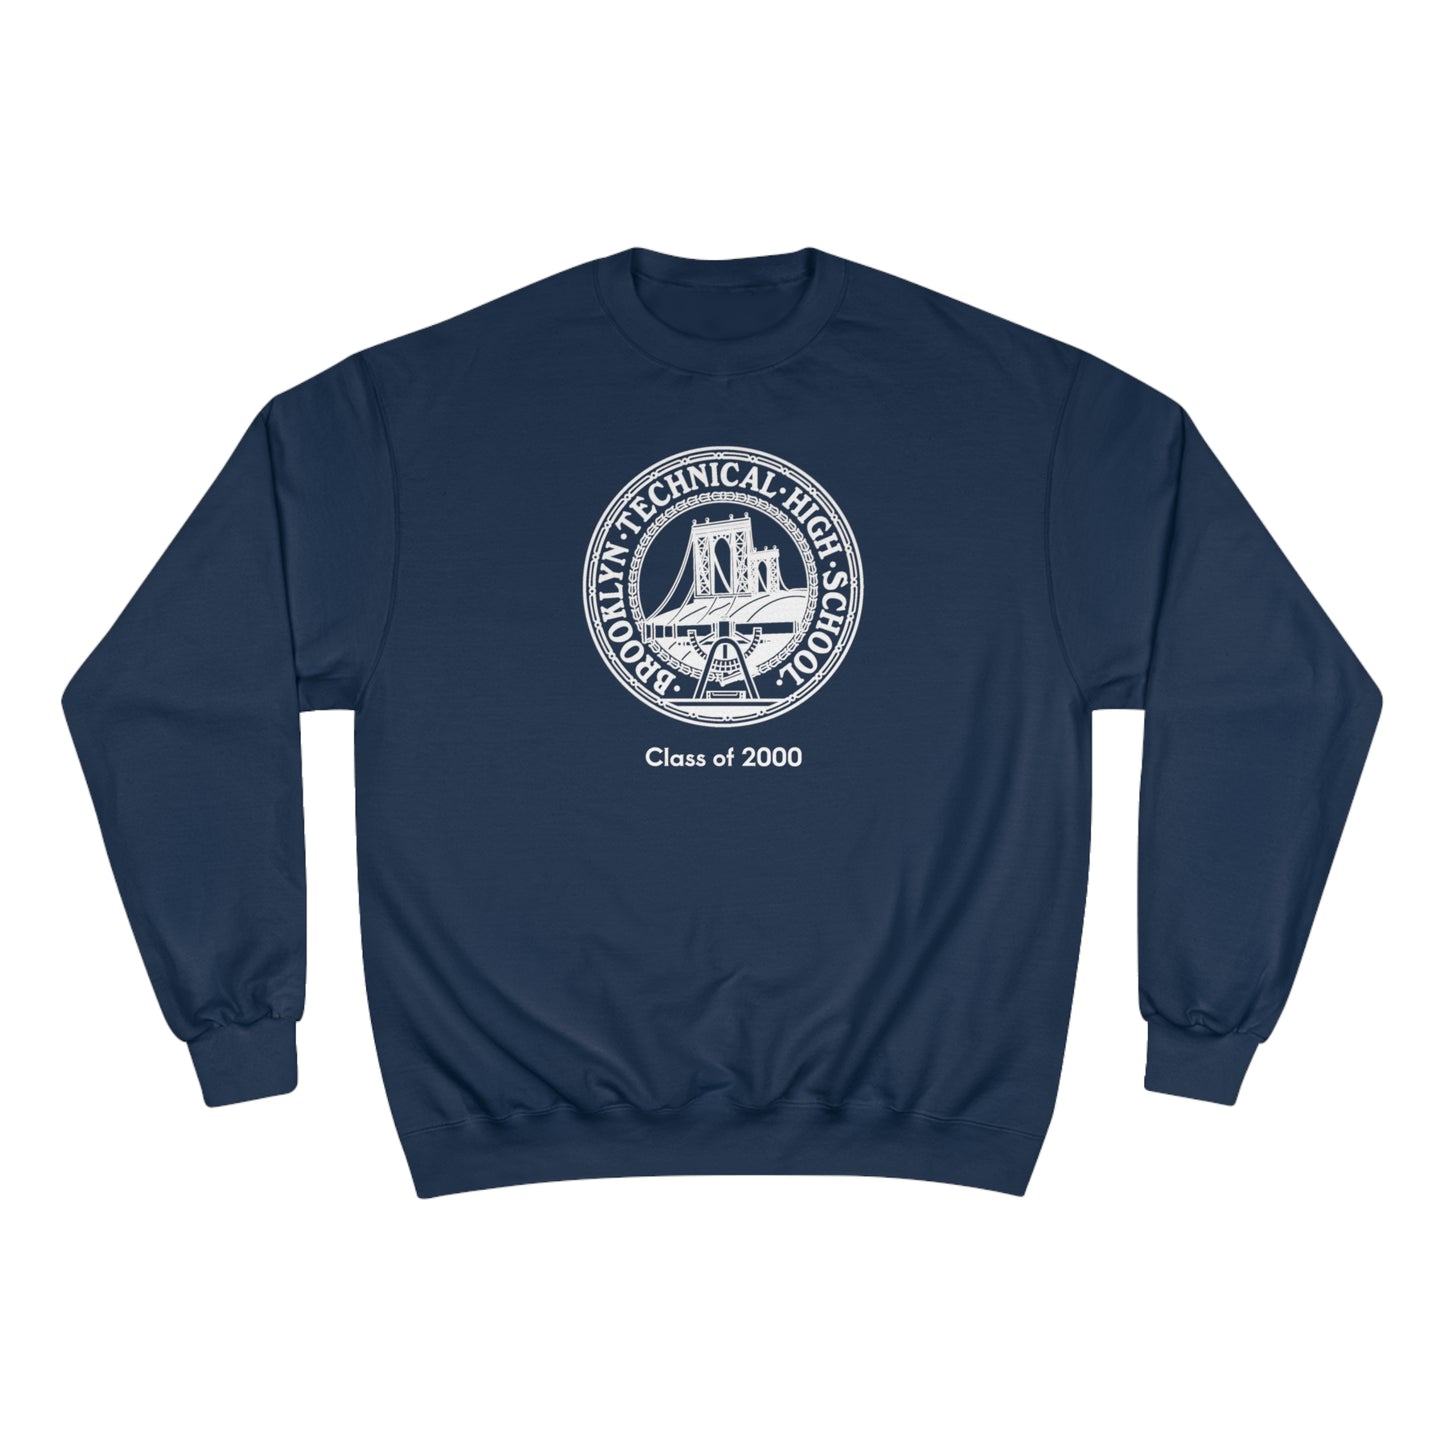 Classic Tech Seal - Champion Crewneck Sweatshirt - Class Of 2000